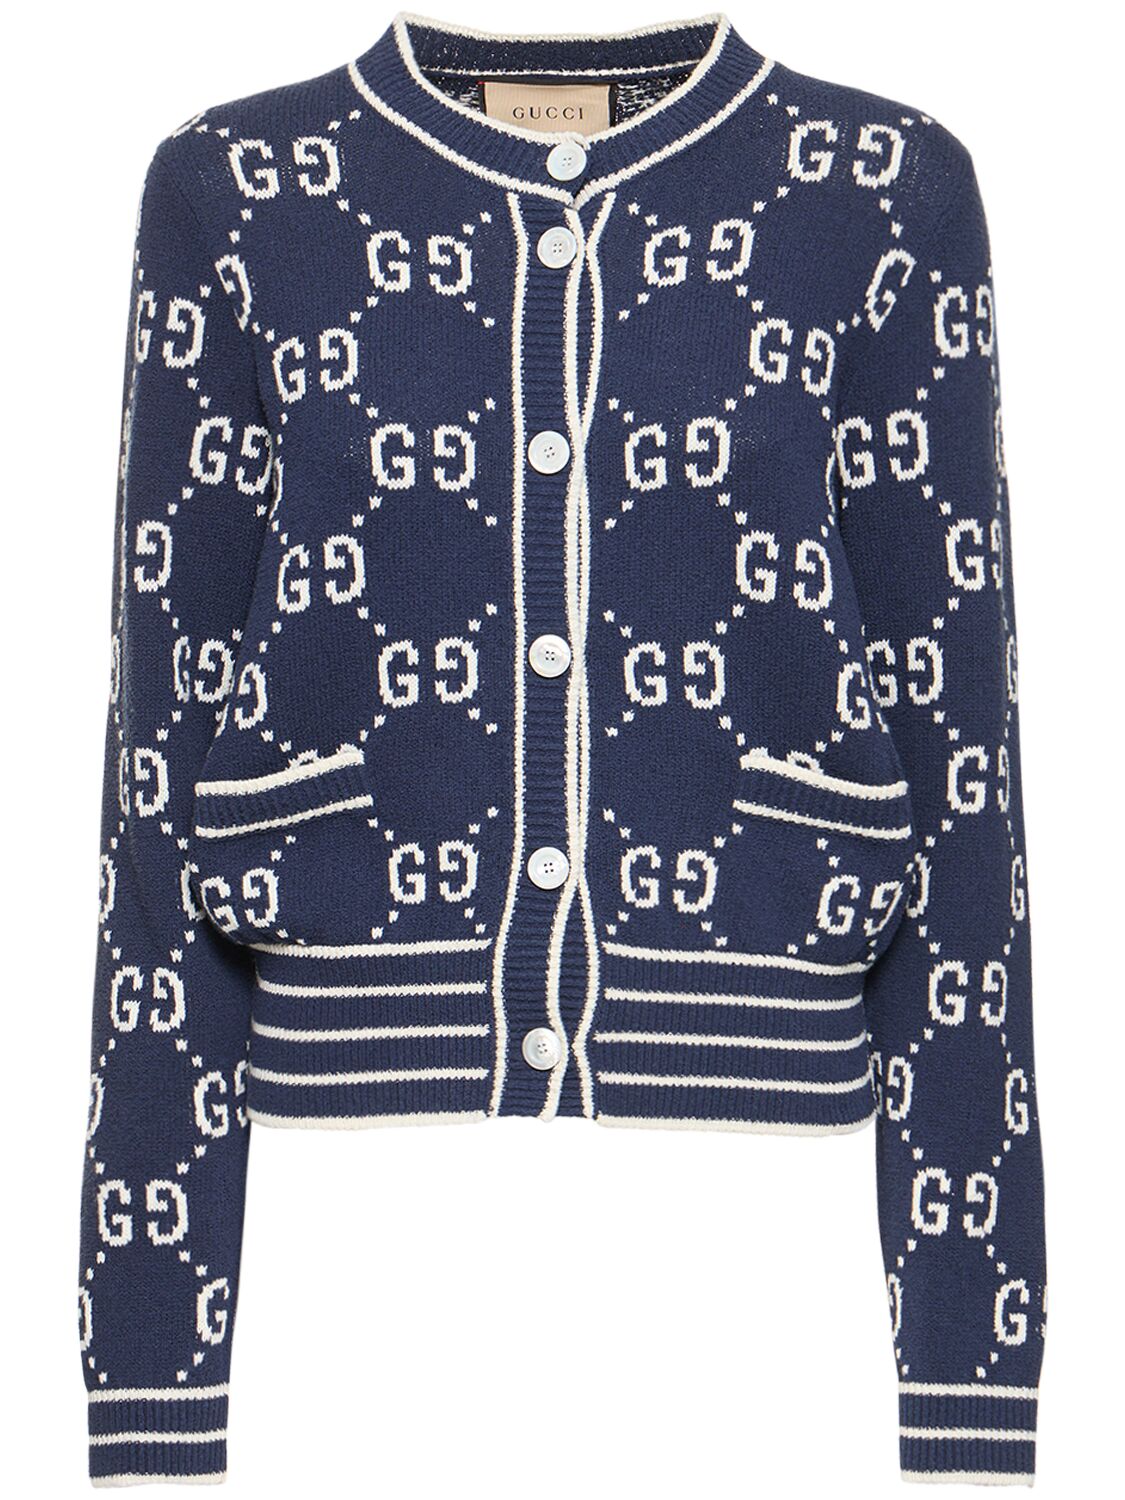 GG wool jacquard cardigan in blue